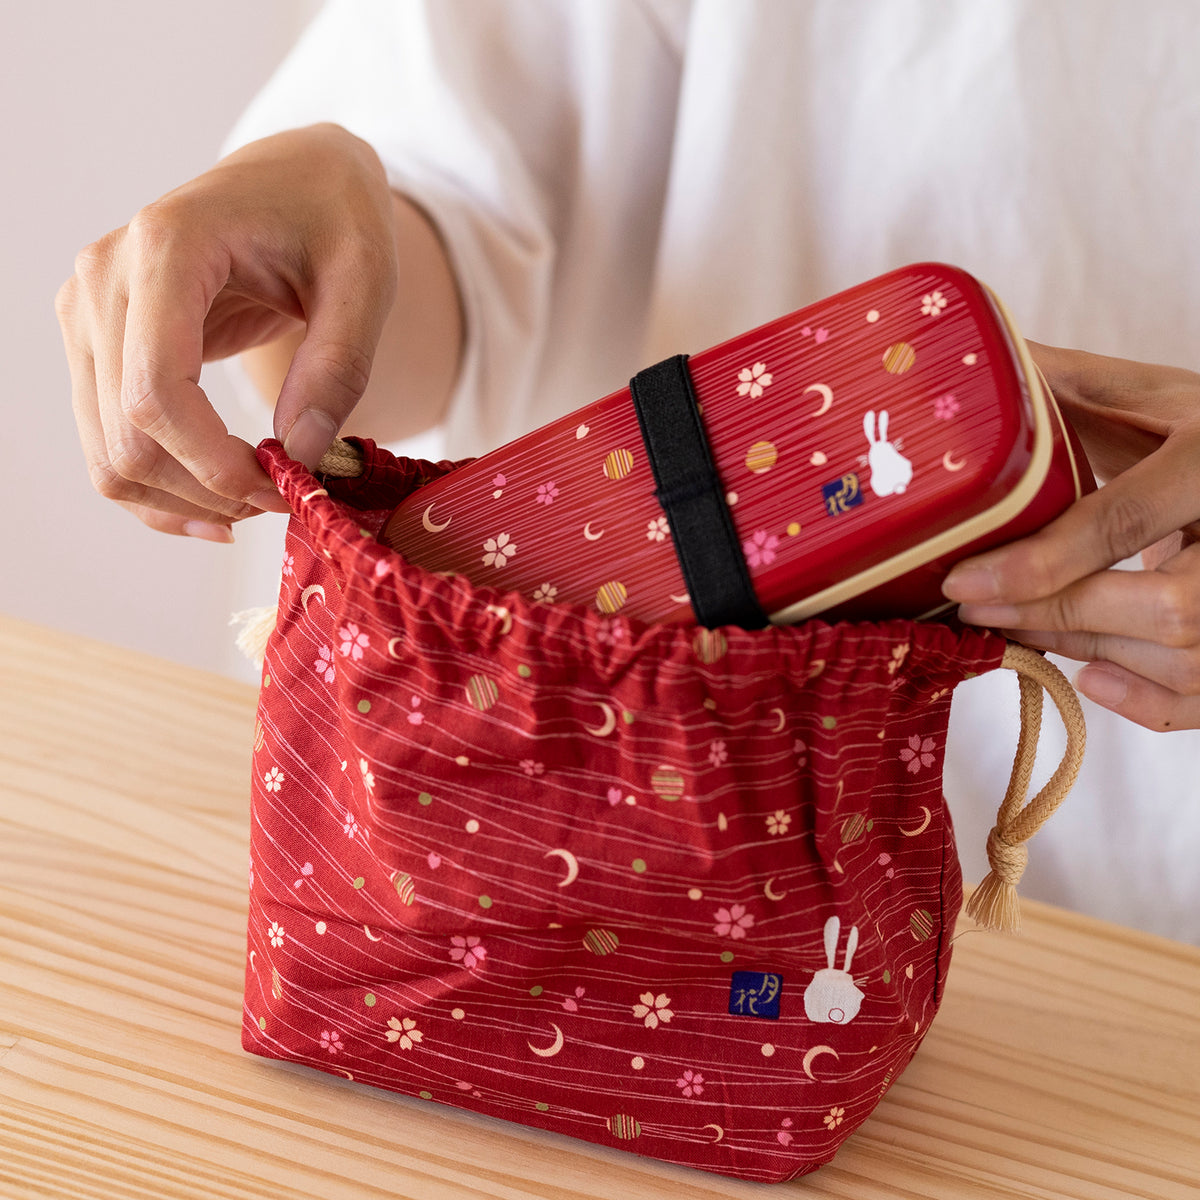 OSK Tsukihana Airtight Bento Lunch Box with Lunch Bag Set